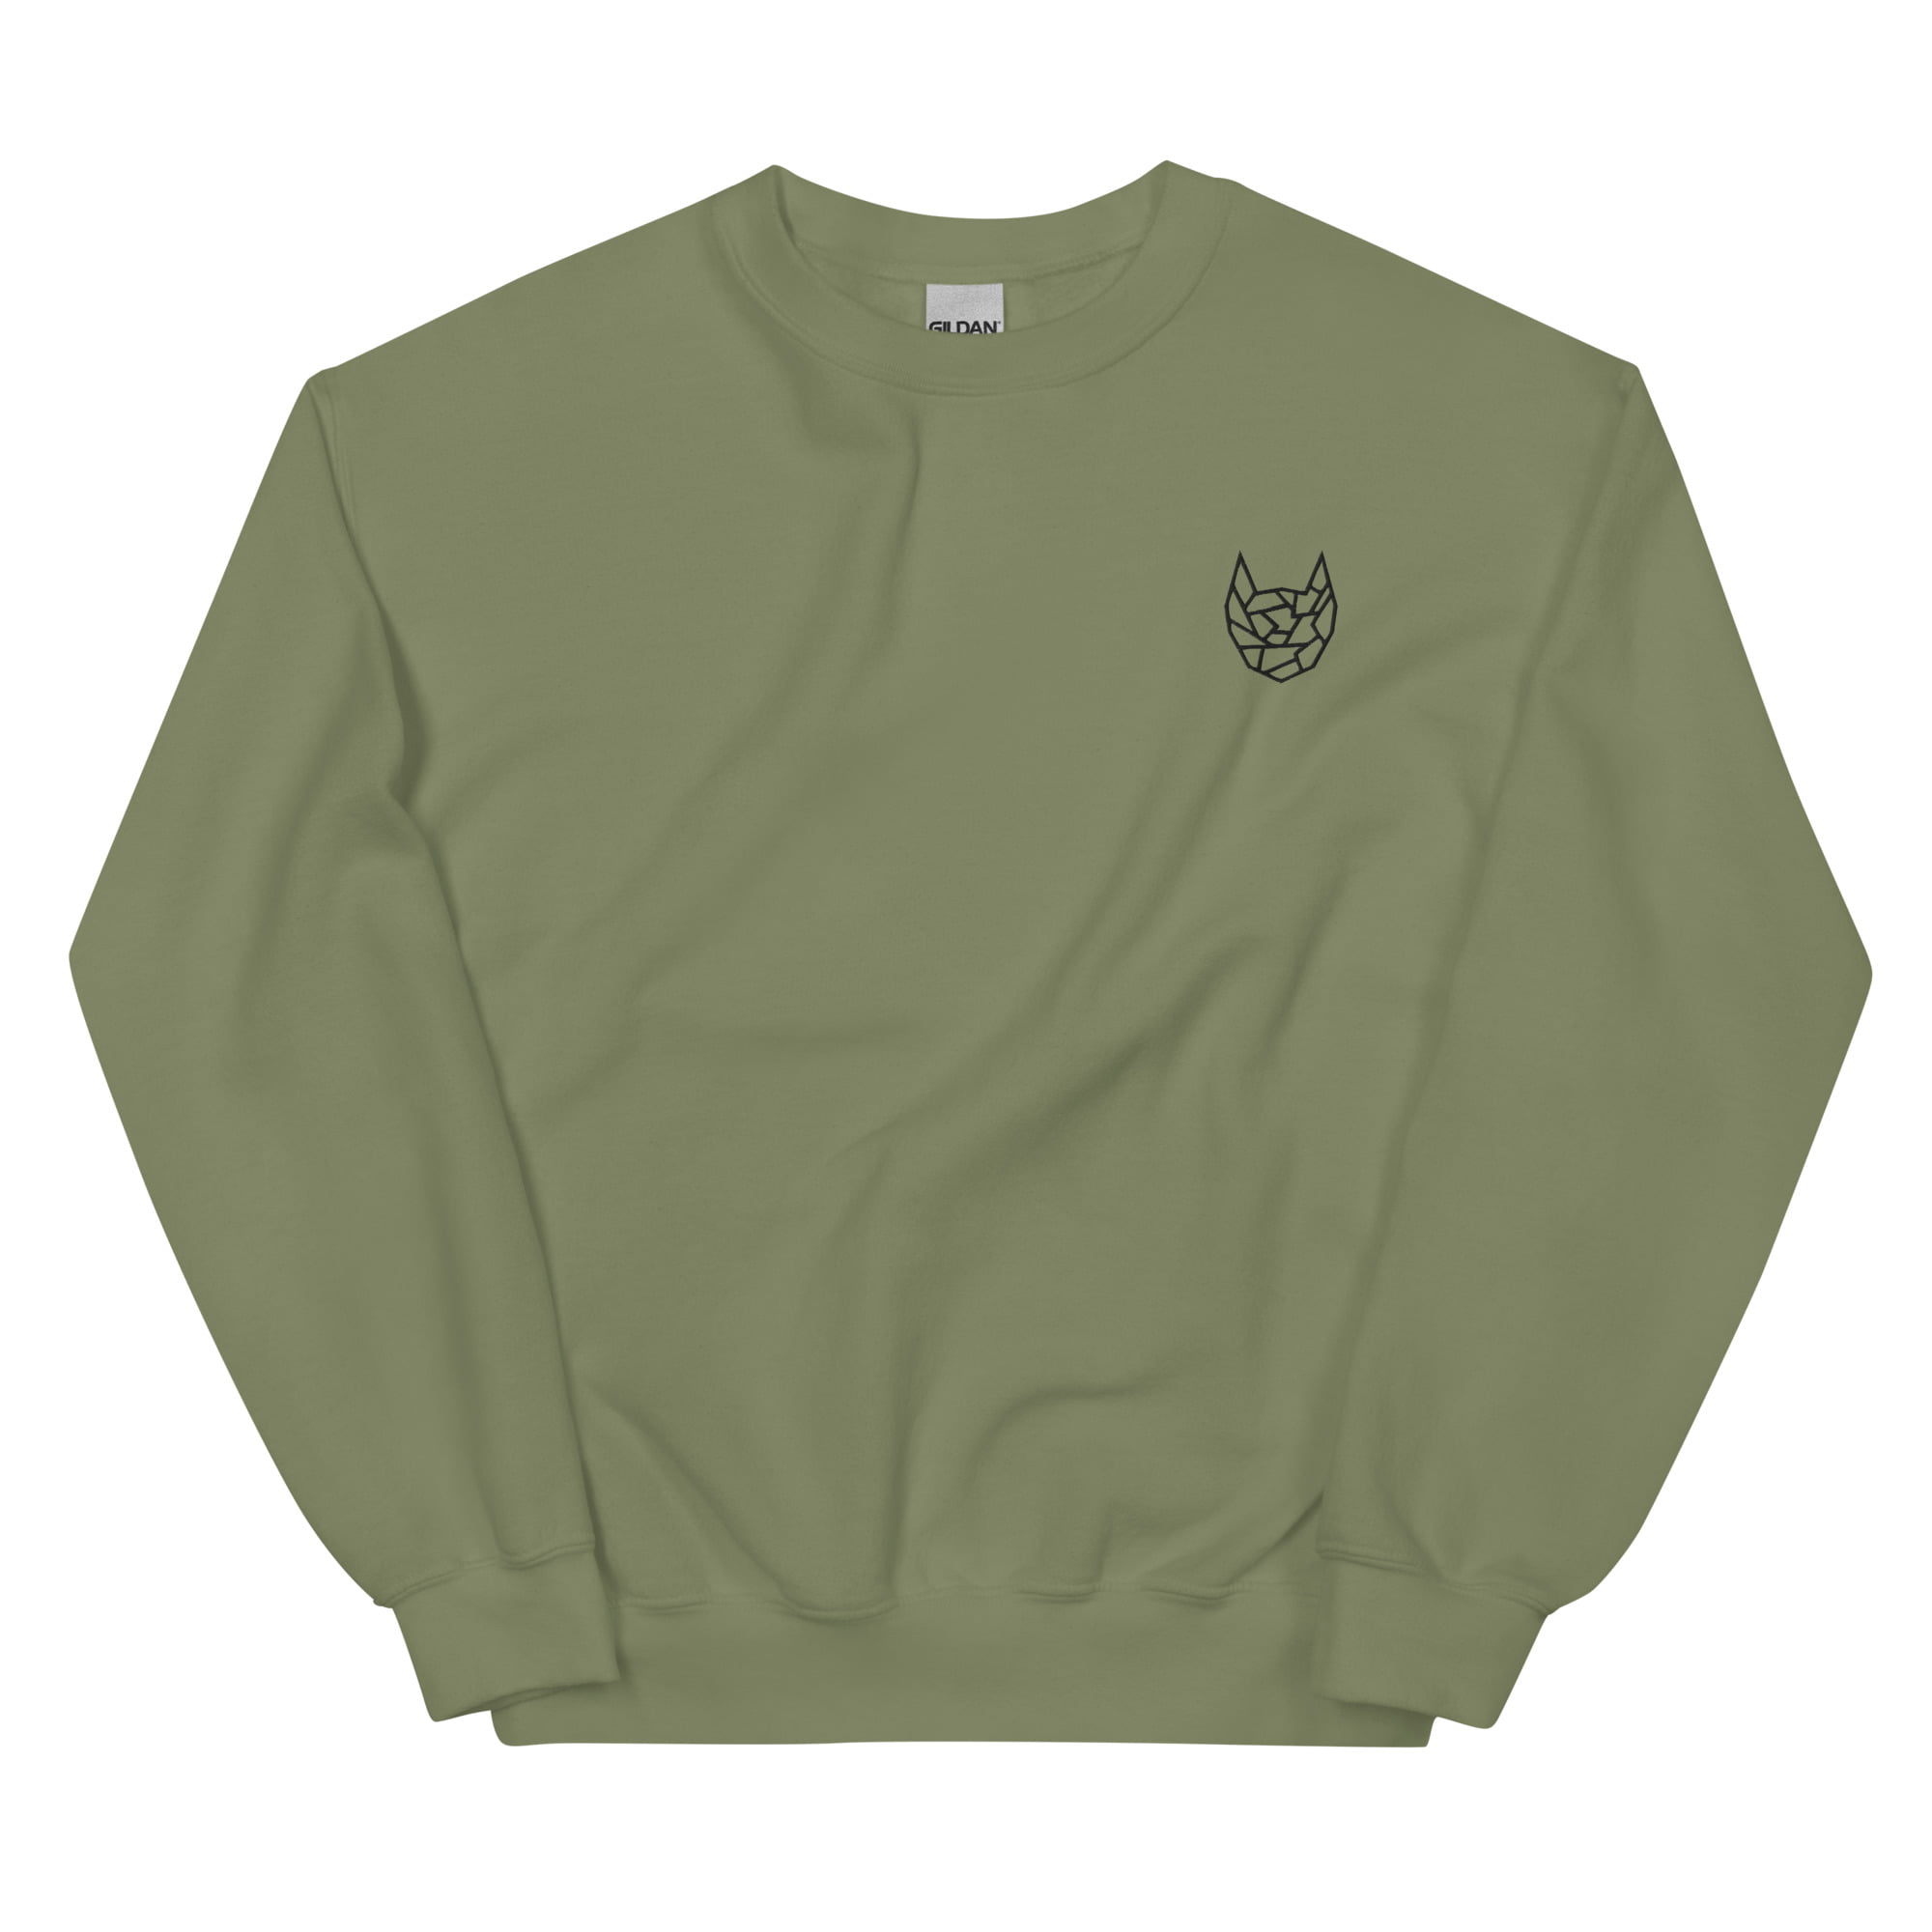 unisex crew neck sweatshirt military green front 6395bc0dad7c0